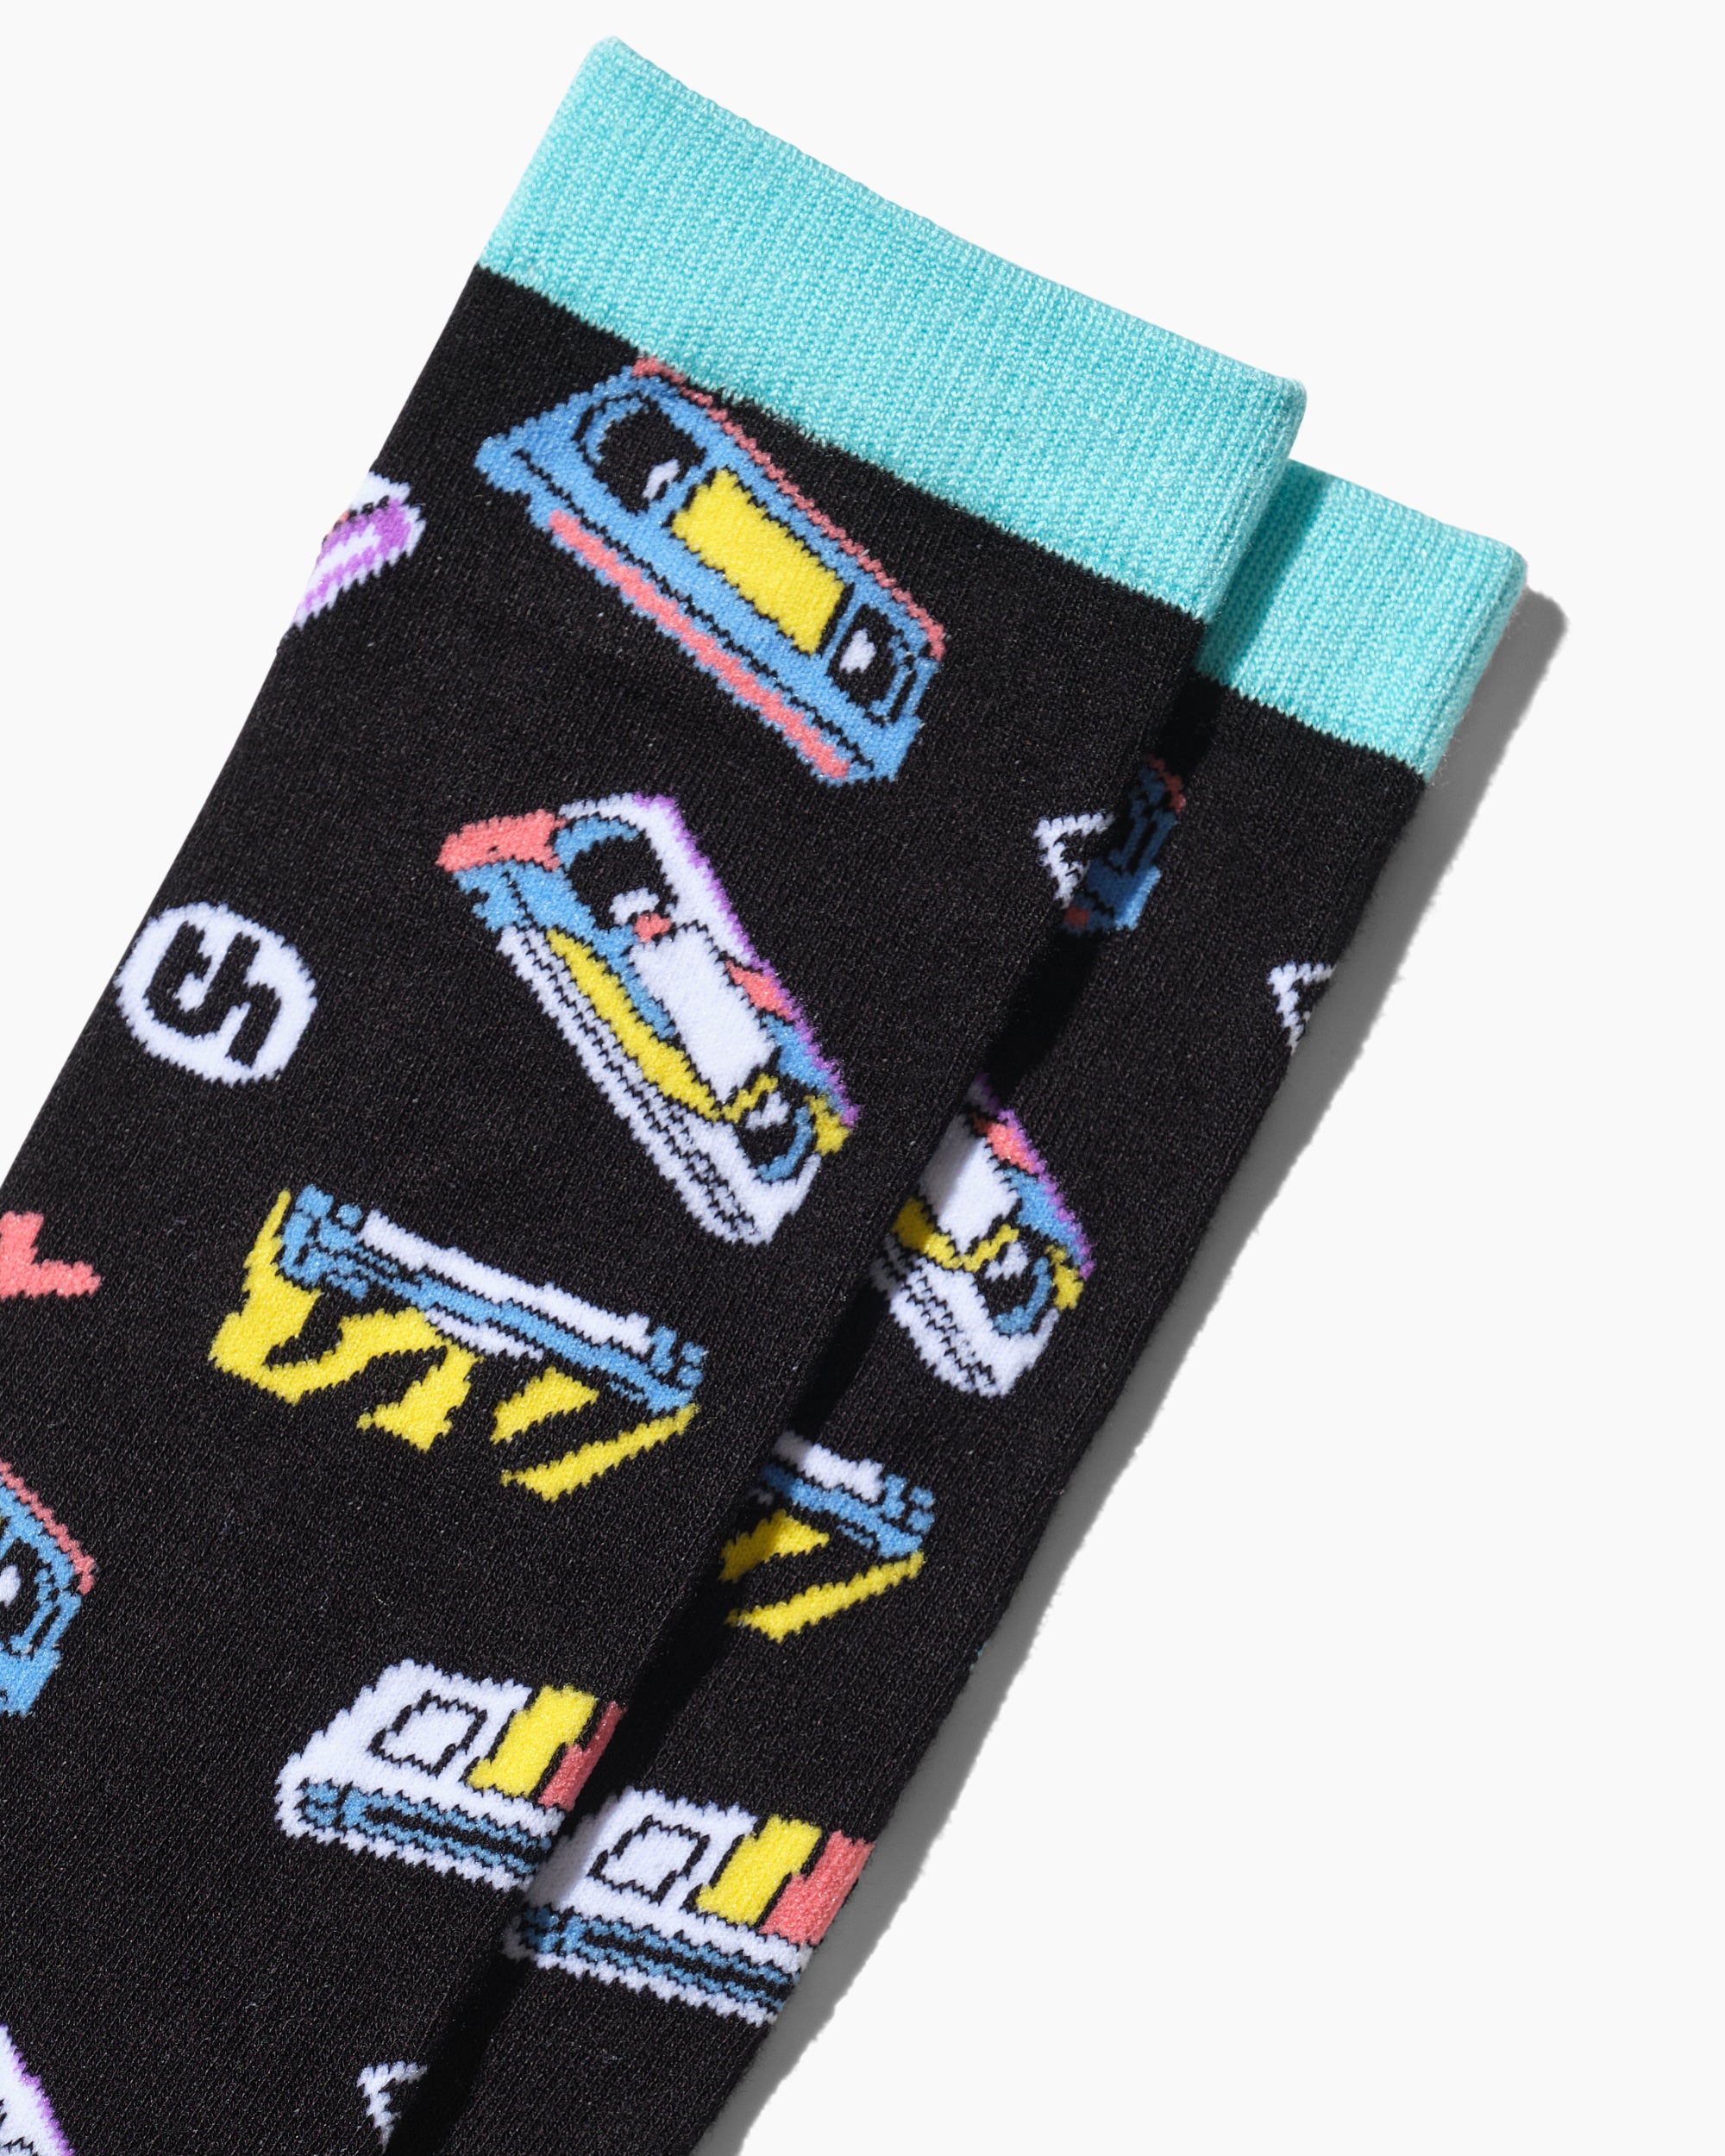 Retro VHS Tapes Socks